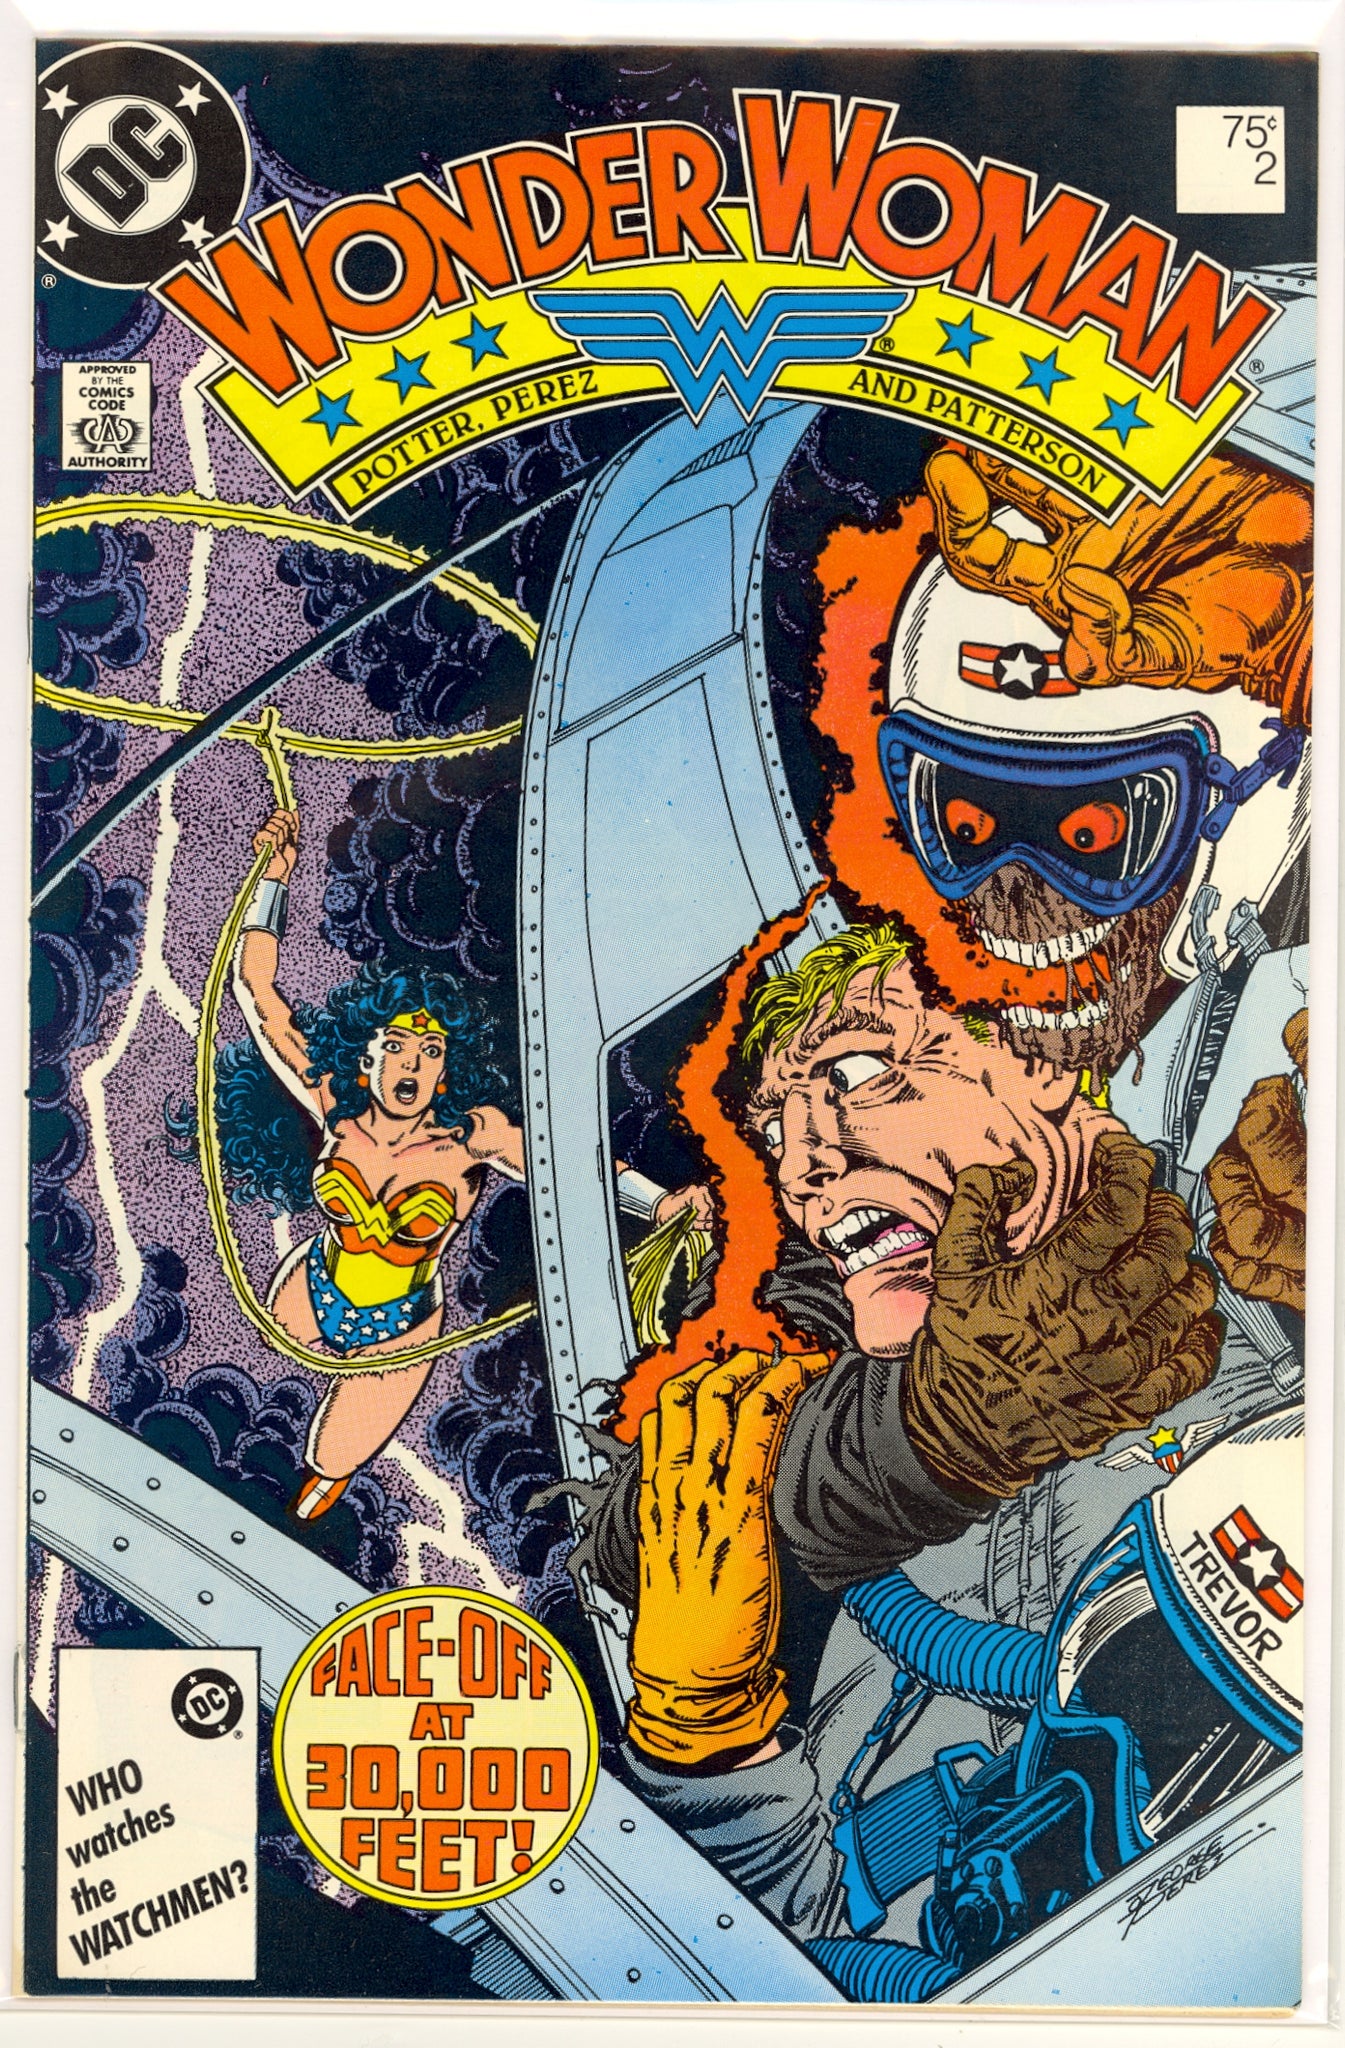 Wonder Woman #2 (1987) no month variant